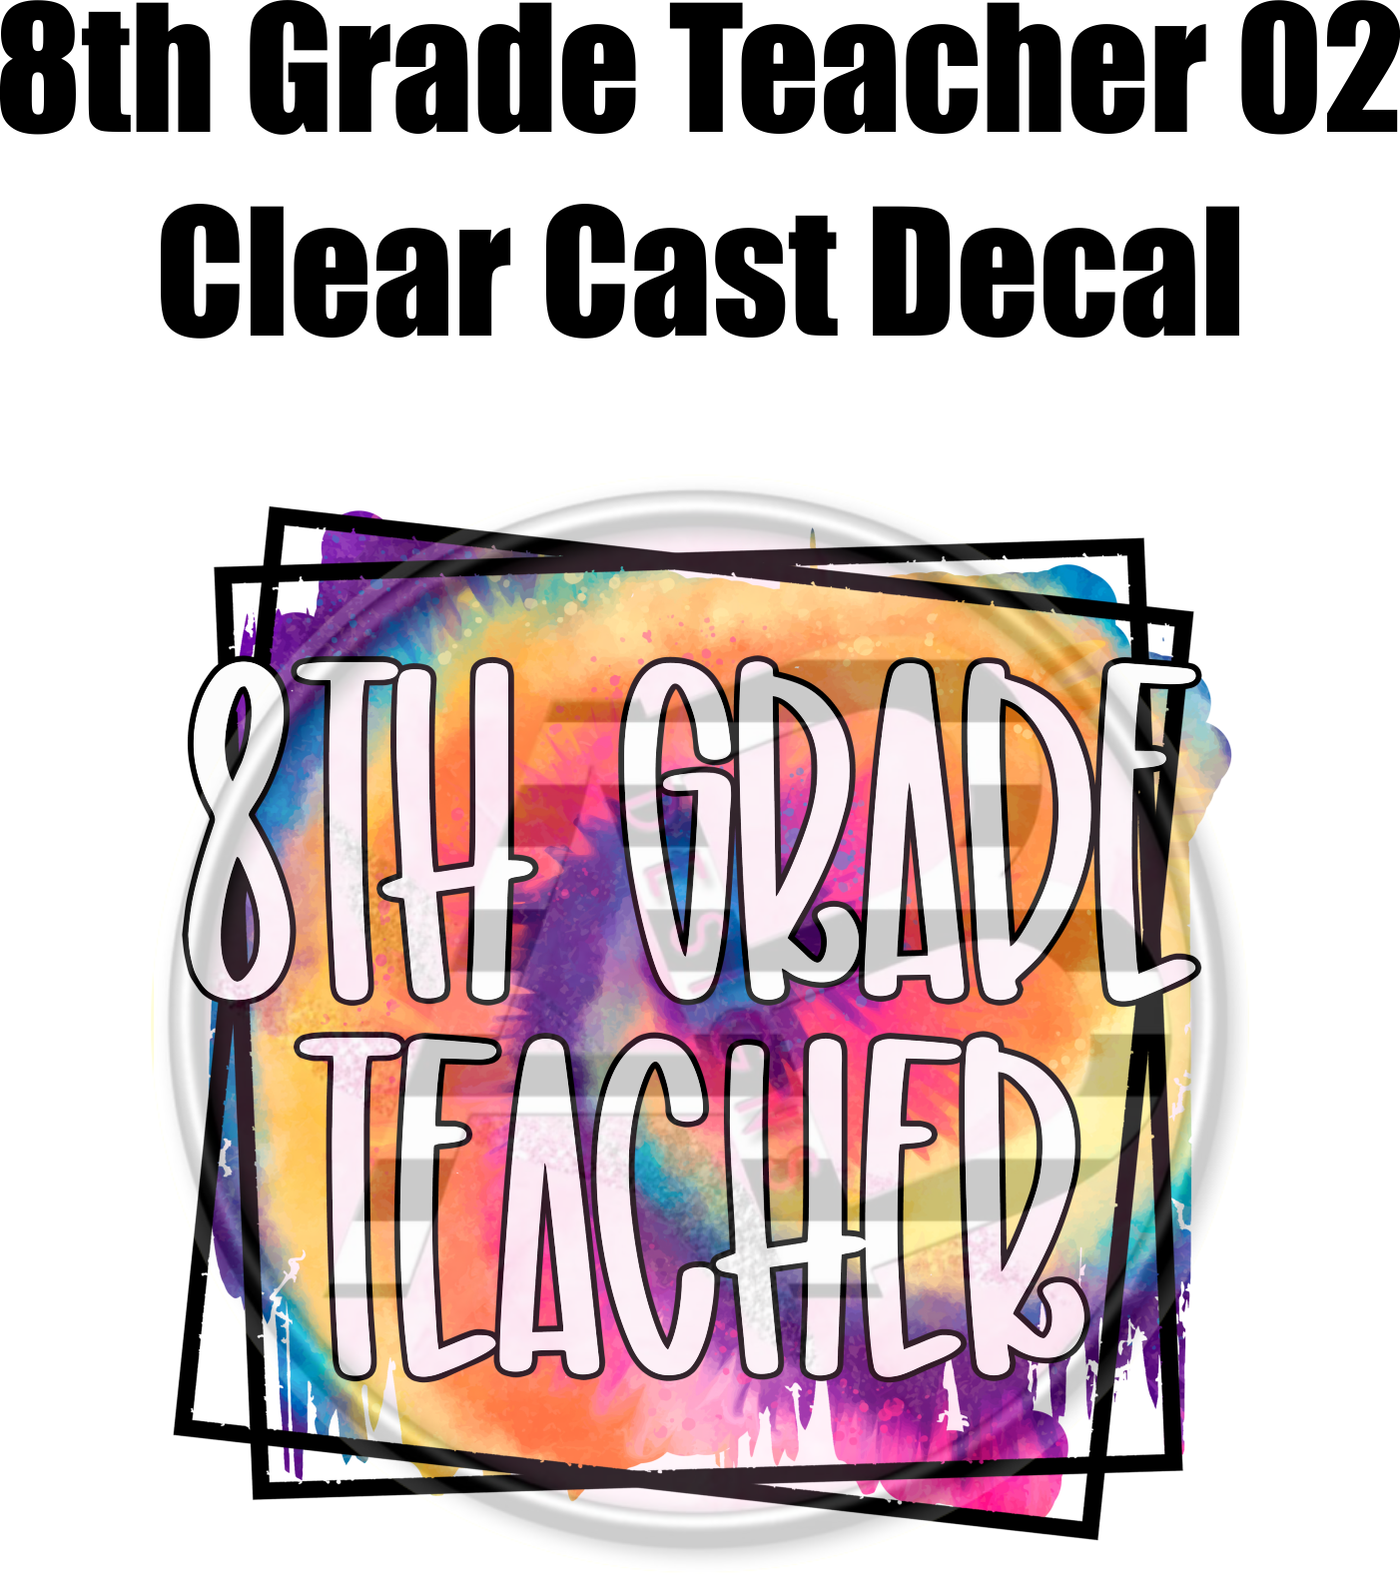 8th Grade Teacher 02 - Clear Cast Decal - 41